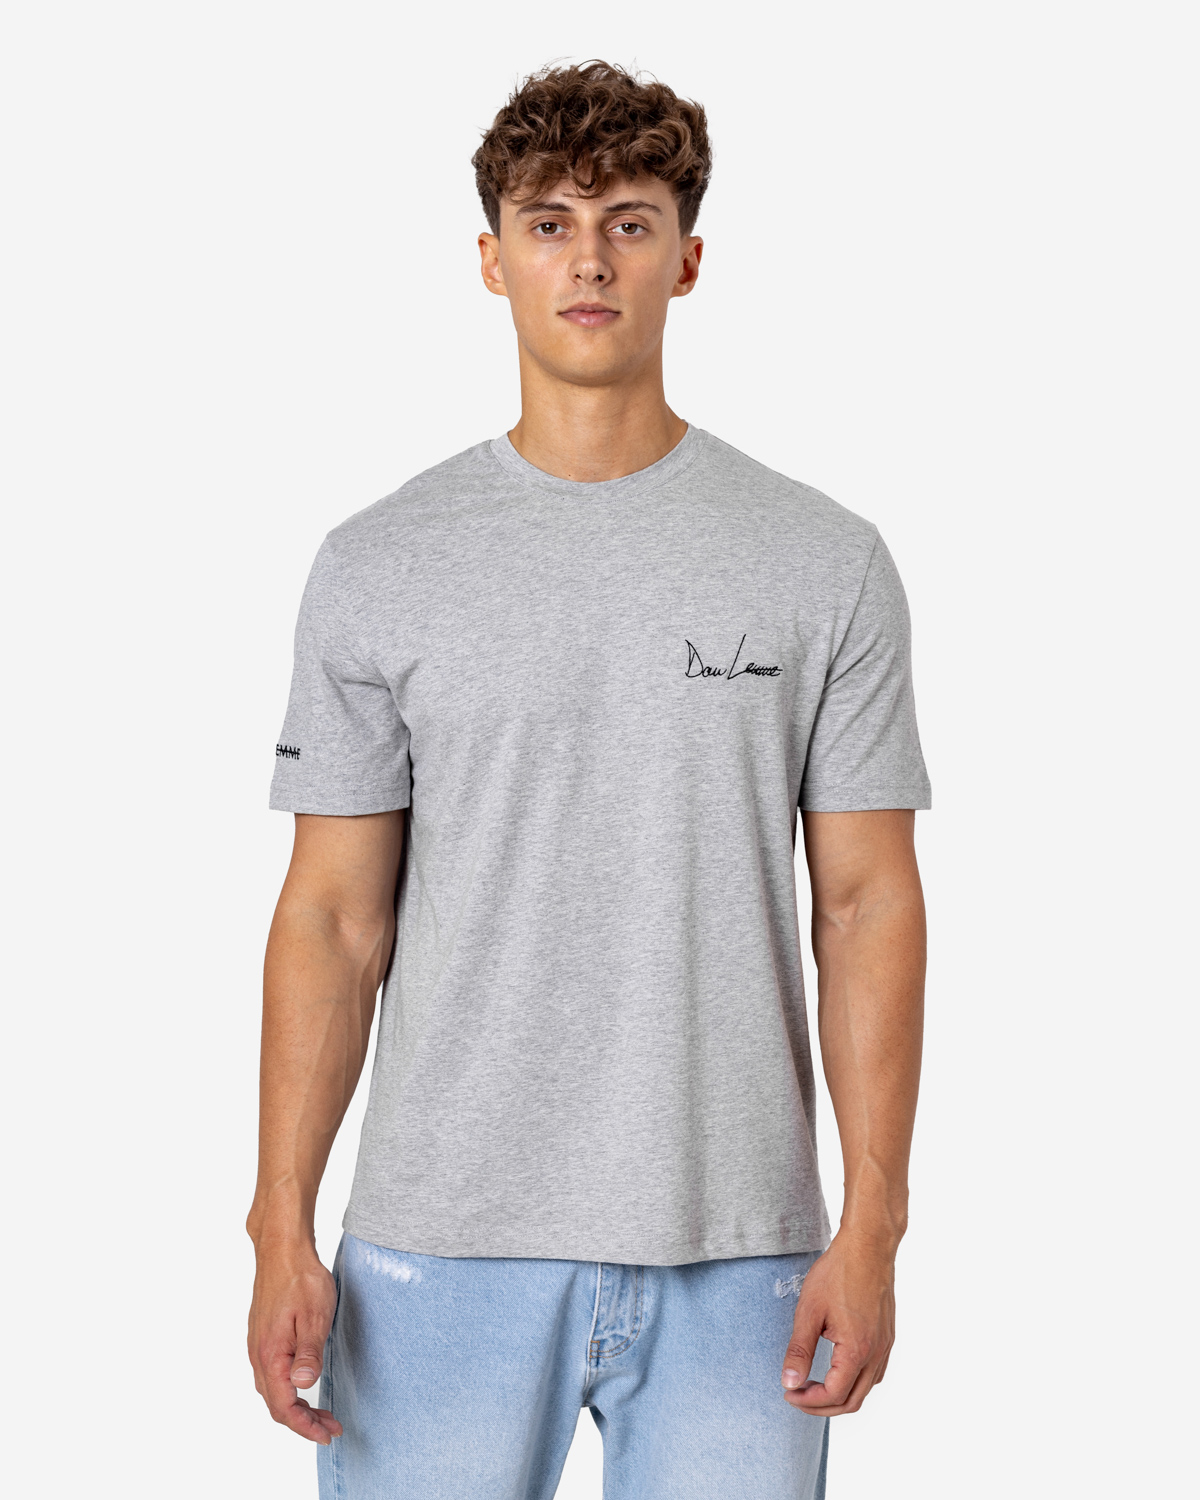 Shirt Novelty - grey